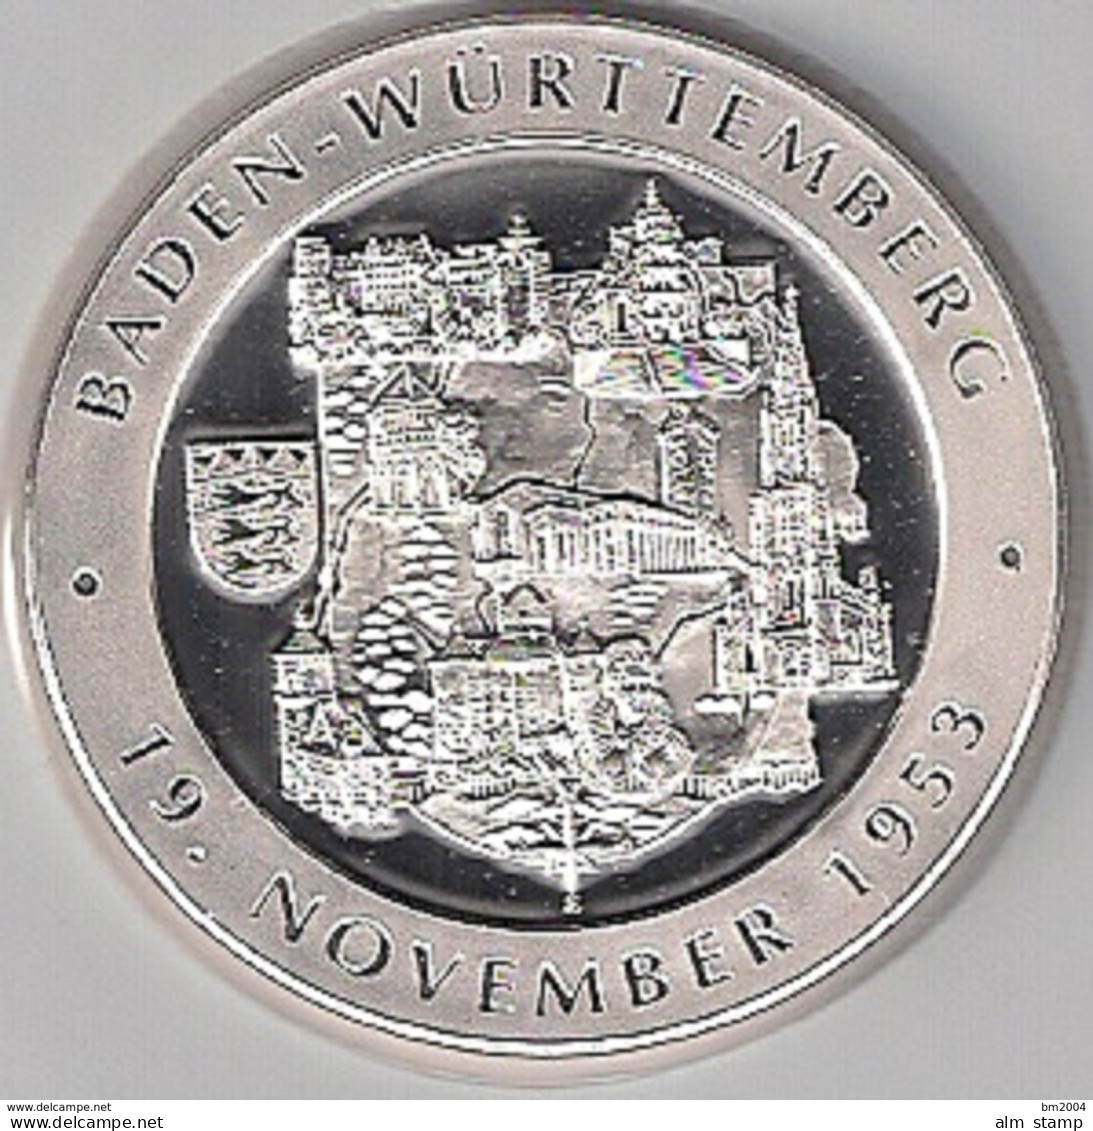 999/1000 Silber Medaille " Baden-Württemberg " PP   36 Mm DMR Rohgewicht : 14 G Prägung : Hochrelief - Souvenir-Medaille (elongated Coins)